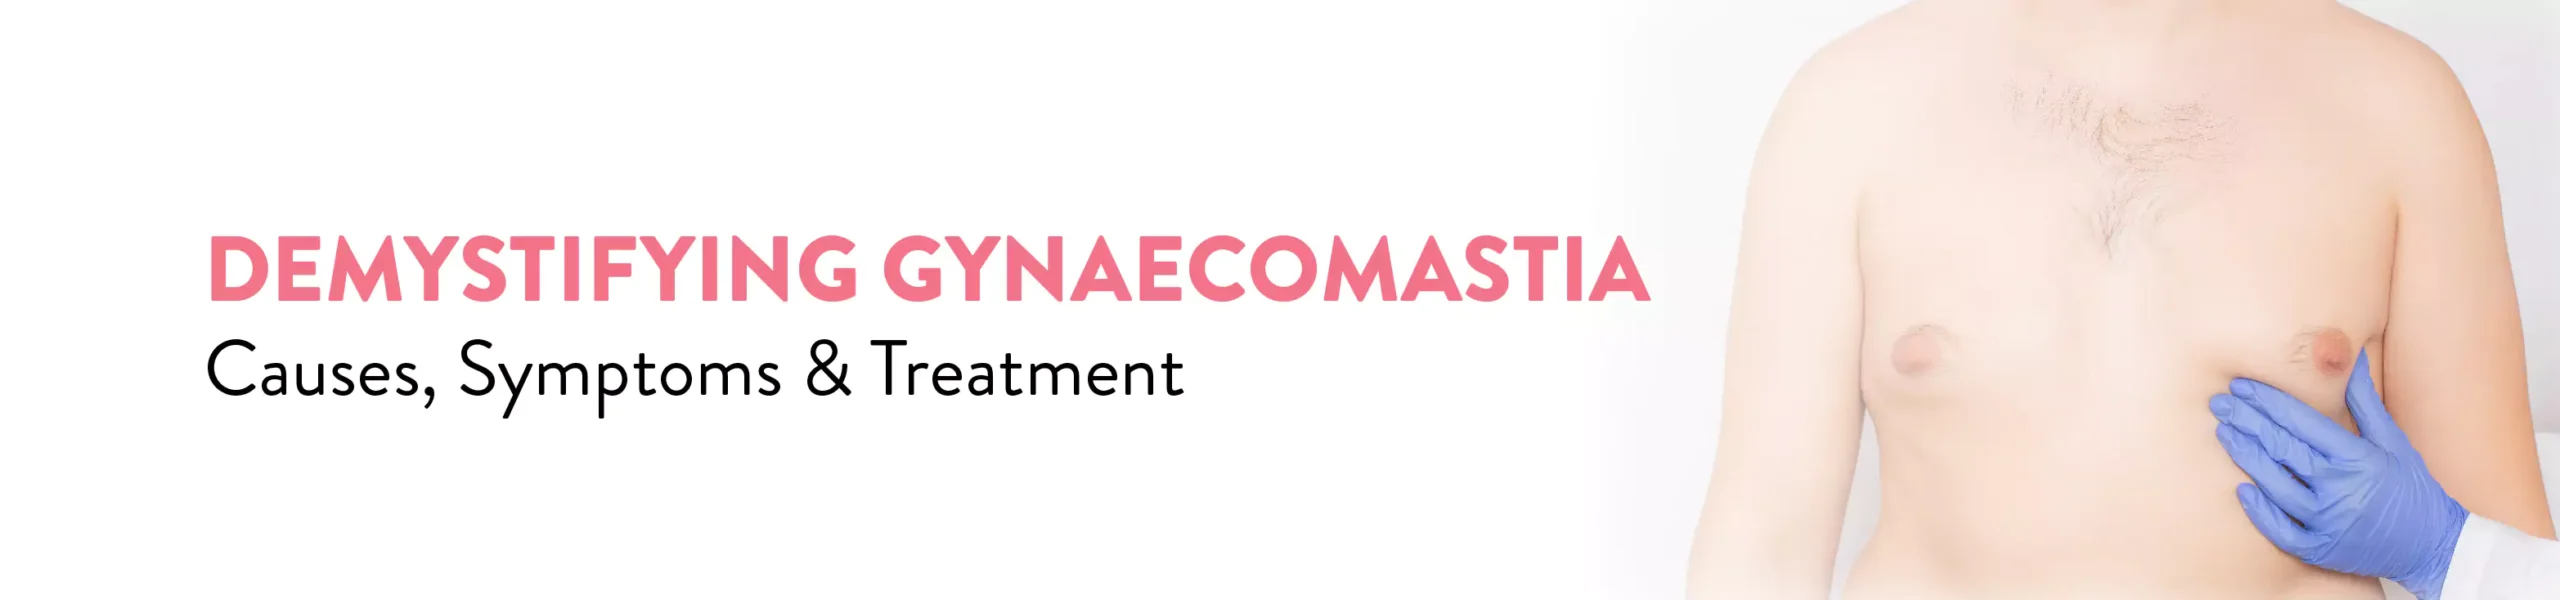 demystifying gynaecomastia causes symptoms ans treatment